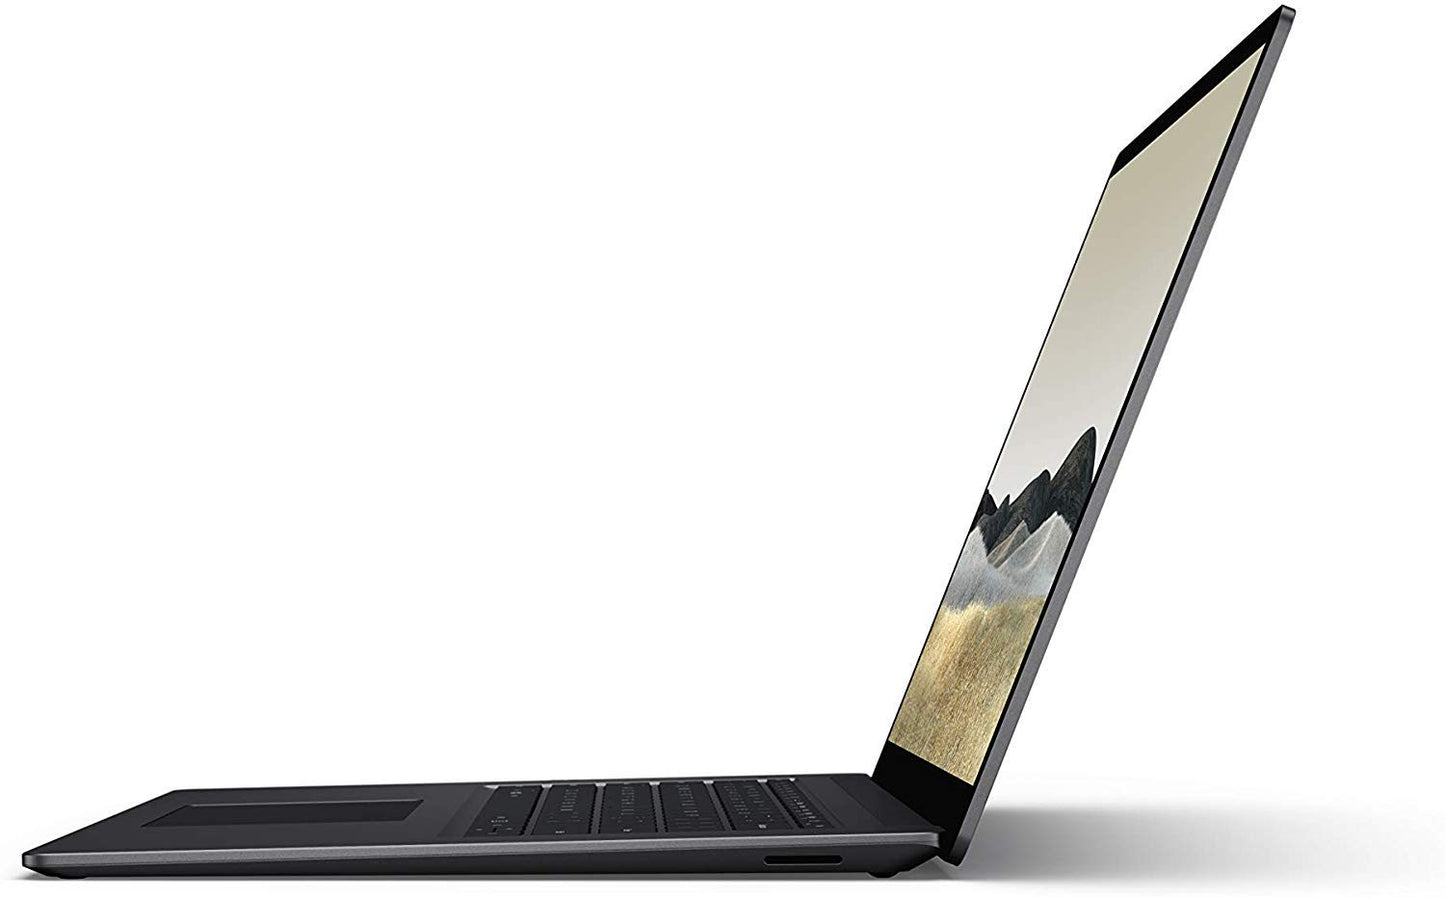 Microsoft Surface Laptop 3 [Vgz-00034] Touchscreen Laptop, Amd Ryzen R5-3580U, 15 Inch, 256Gb, 8Gb Ram, Amd Radeon™ Vega 9 Graphics, Win10, Eng-Ara Kb, Black Color [Middle East Version]